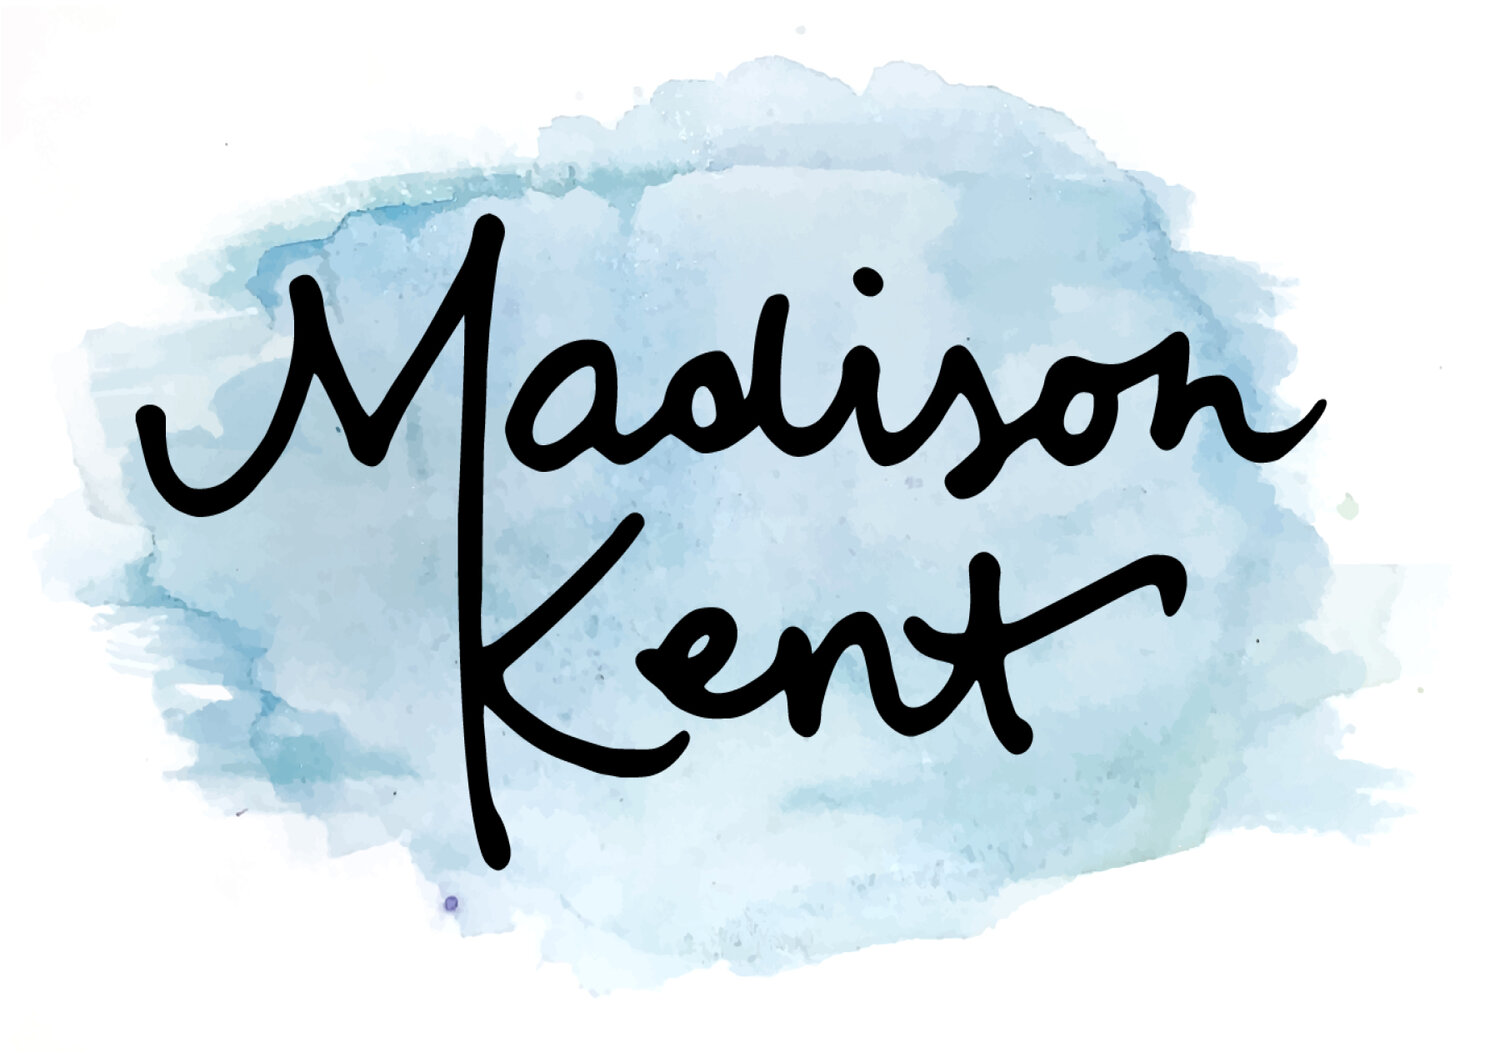 Madison Kent Art